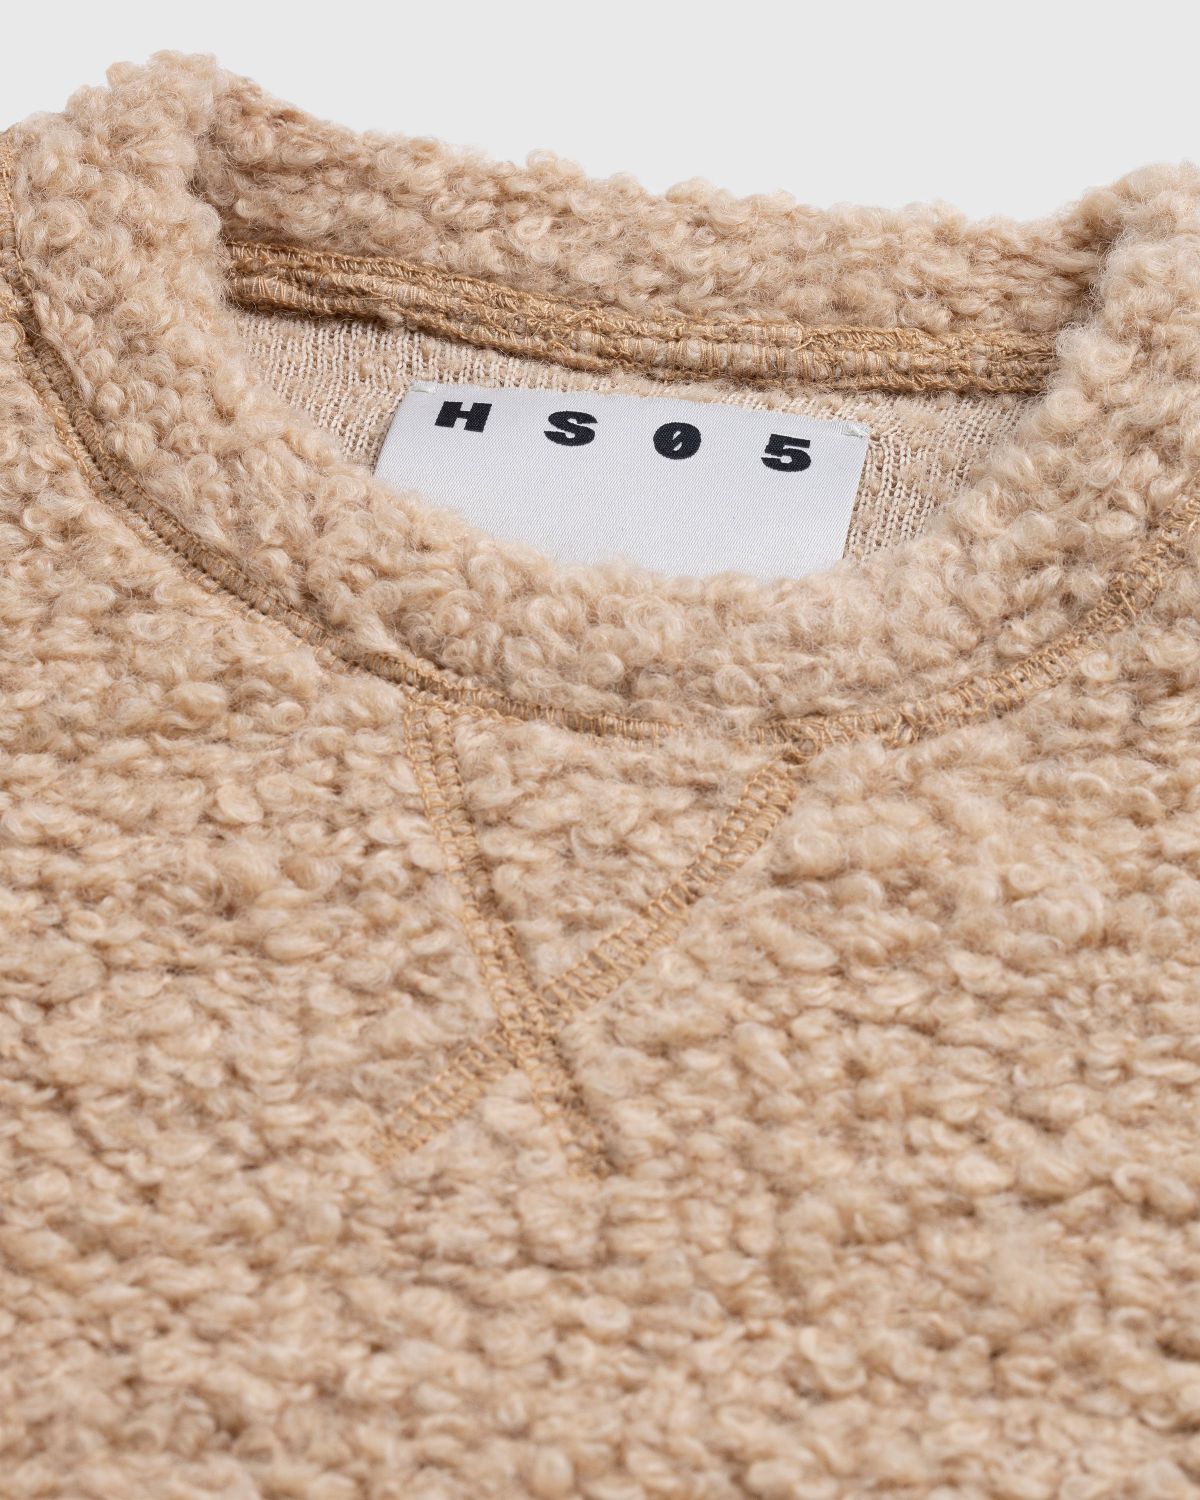 Highsnobiety HS05 – Wool Blend Inlaid Knit Crew Brown - Crewnecks - Brown - Image 6